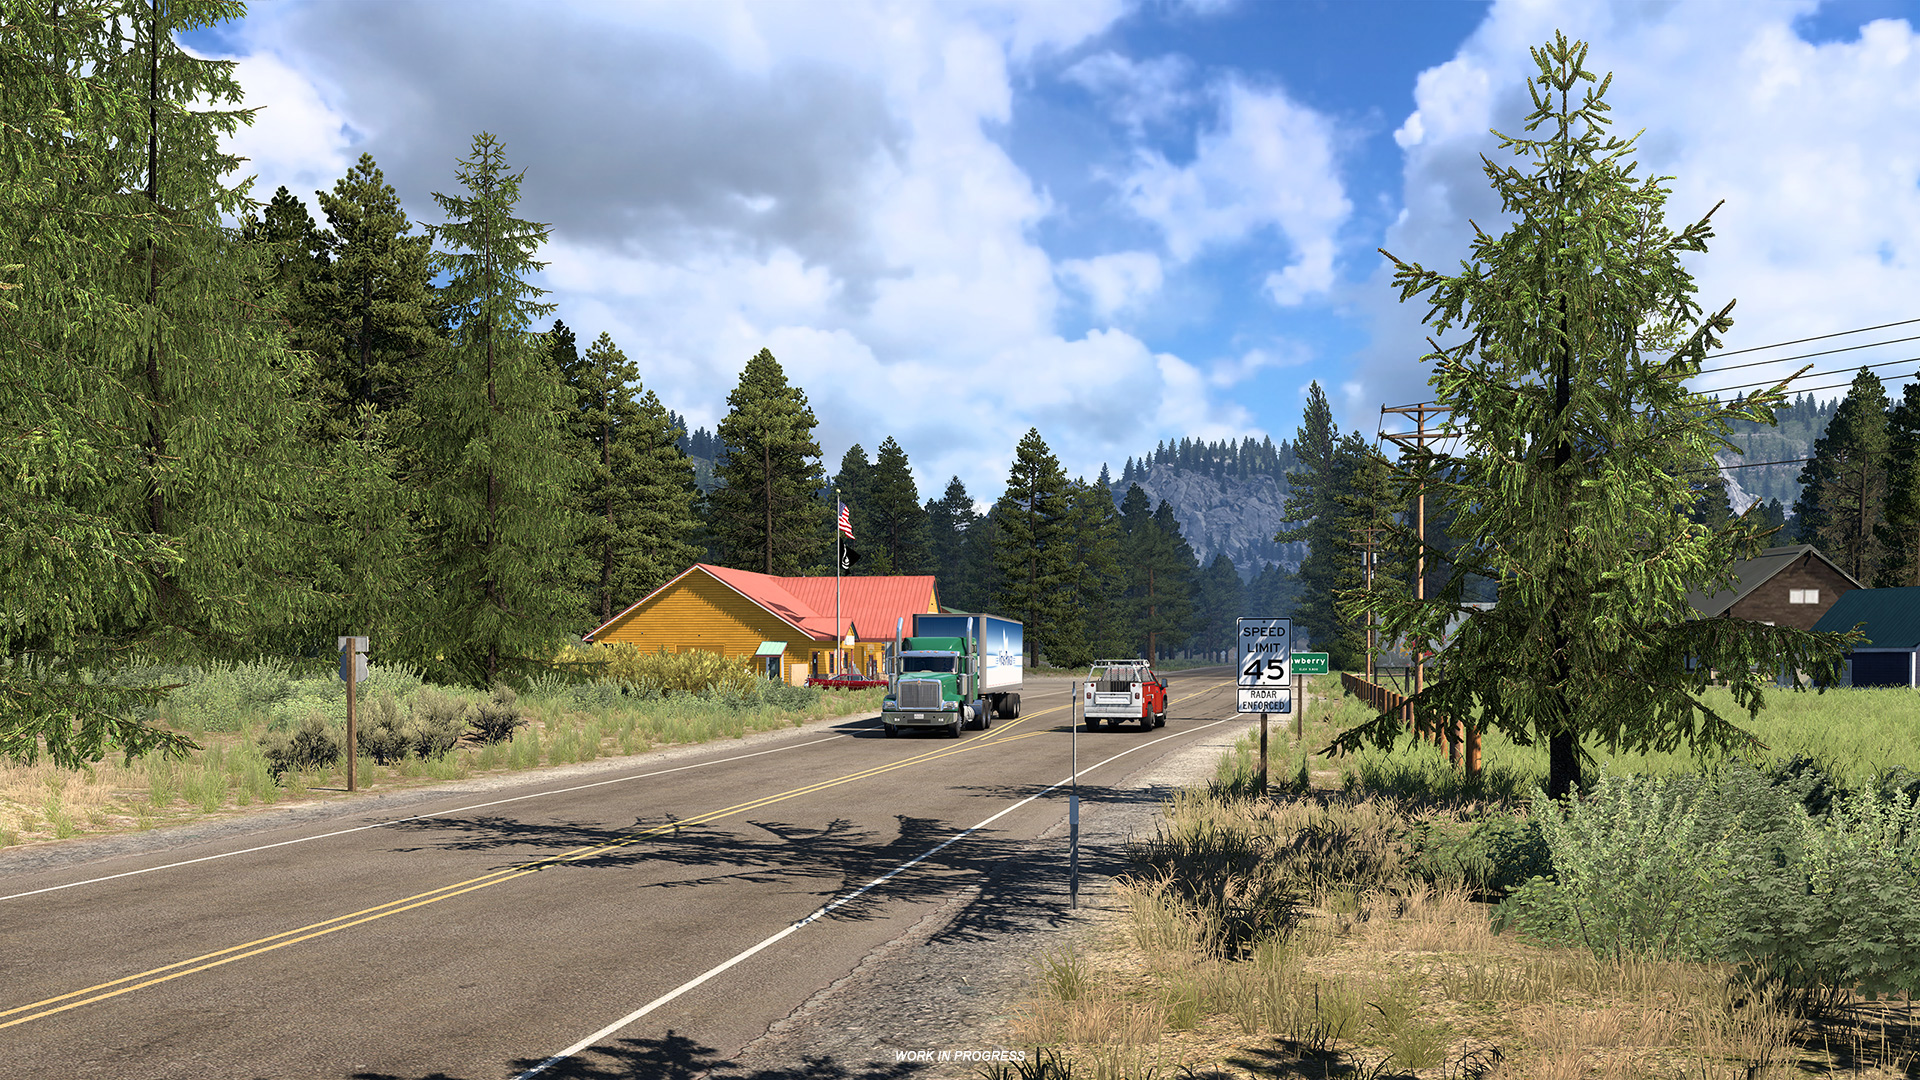 American Truck Simulator's massive California overhaul continues in latest  update